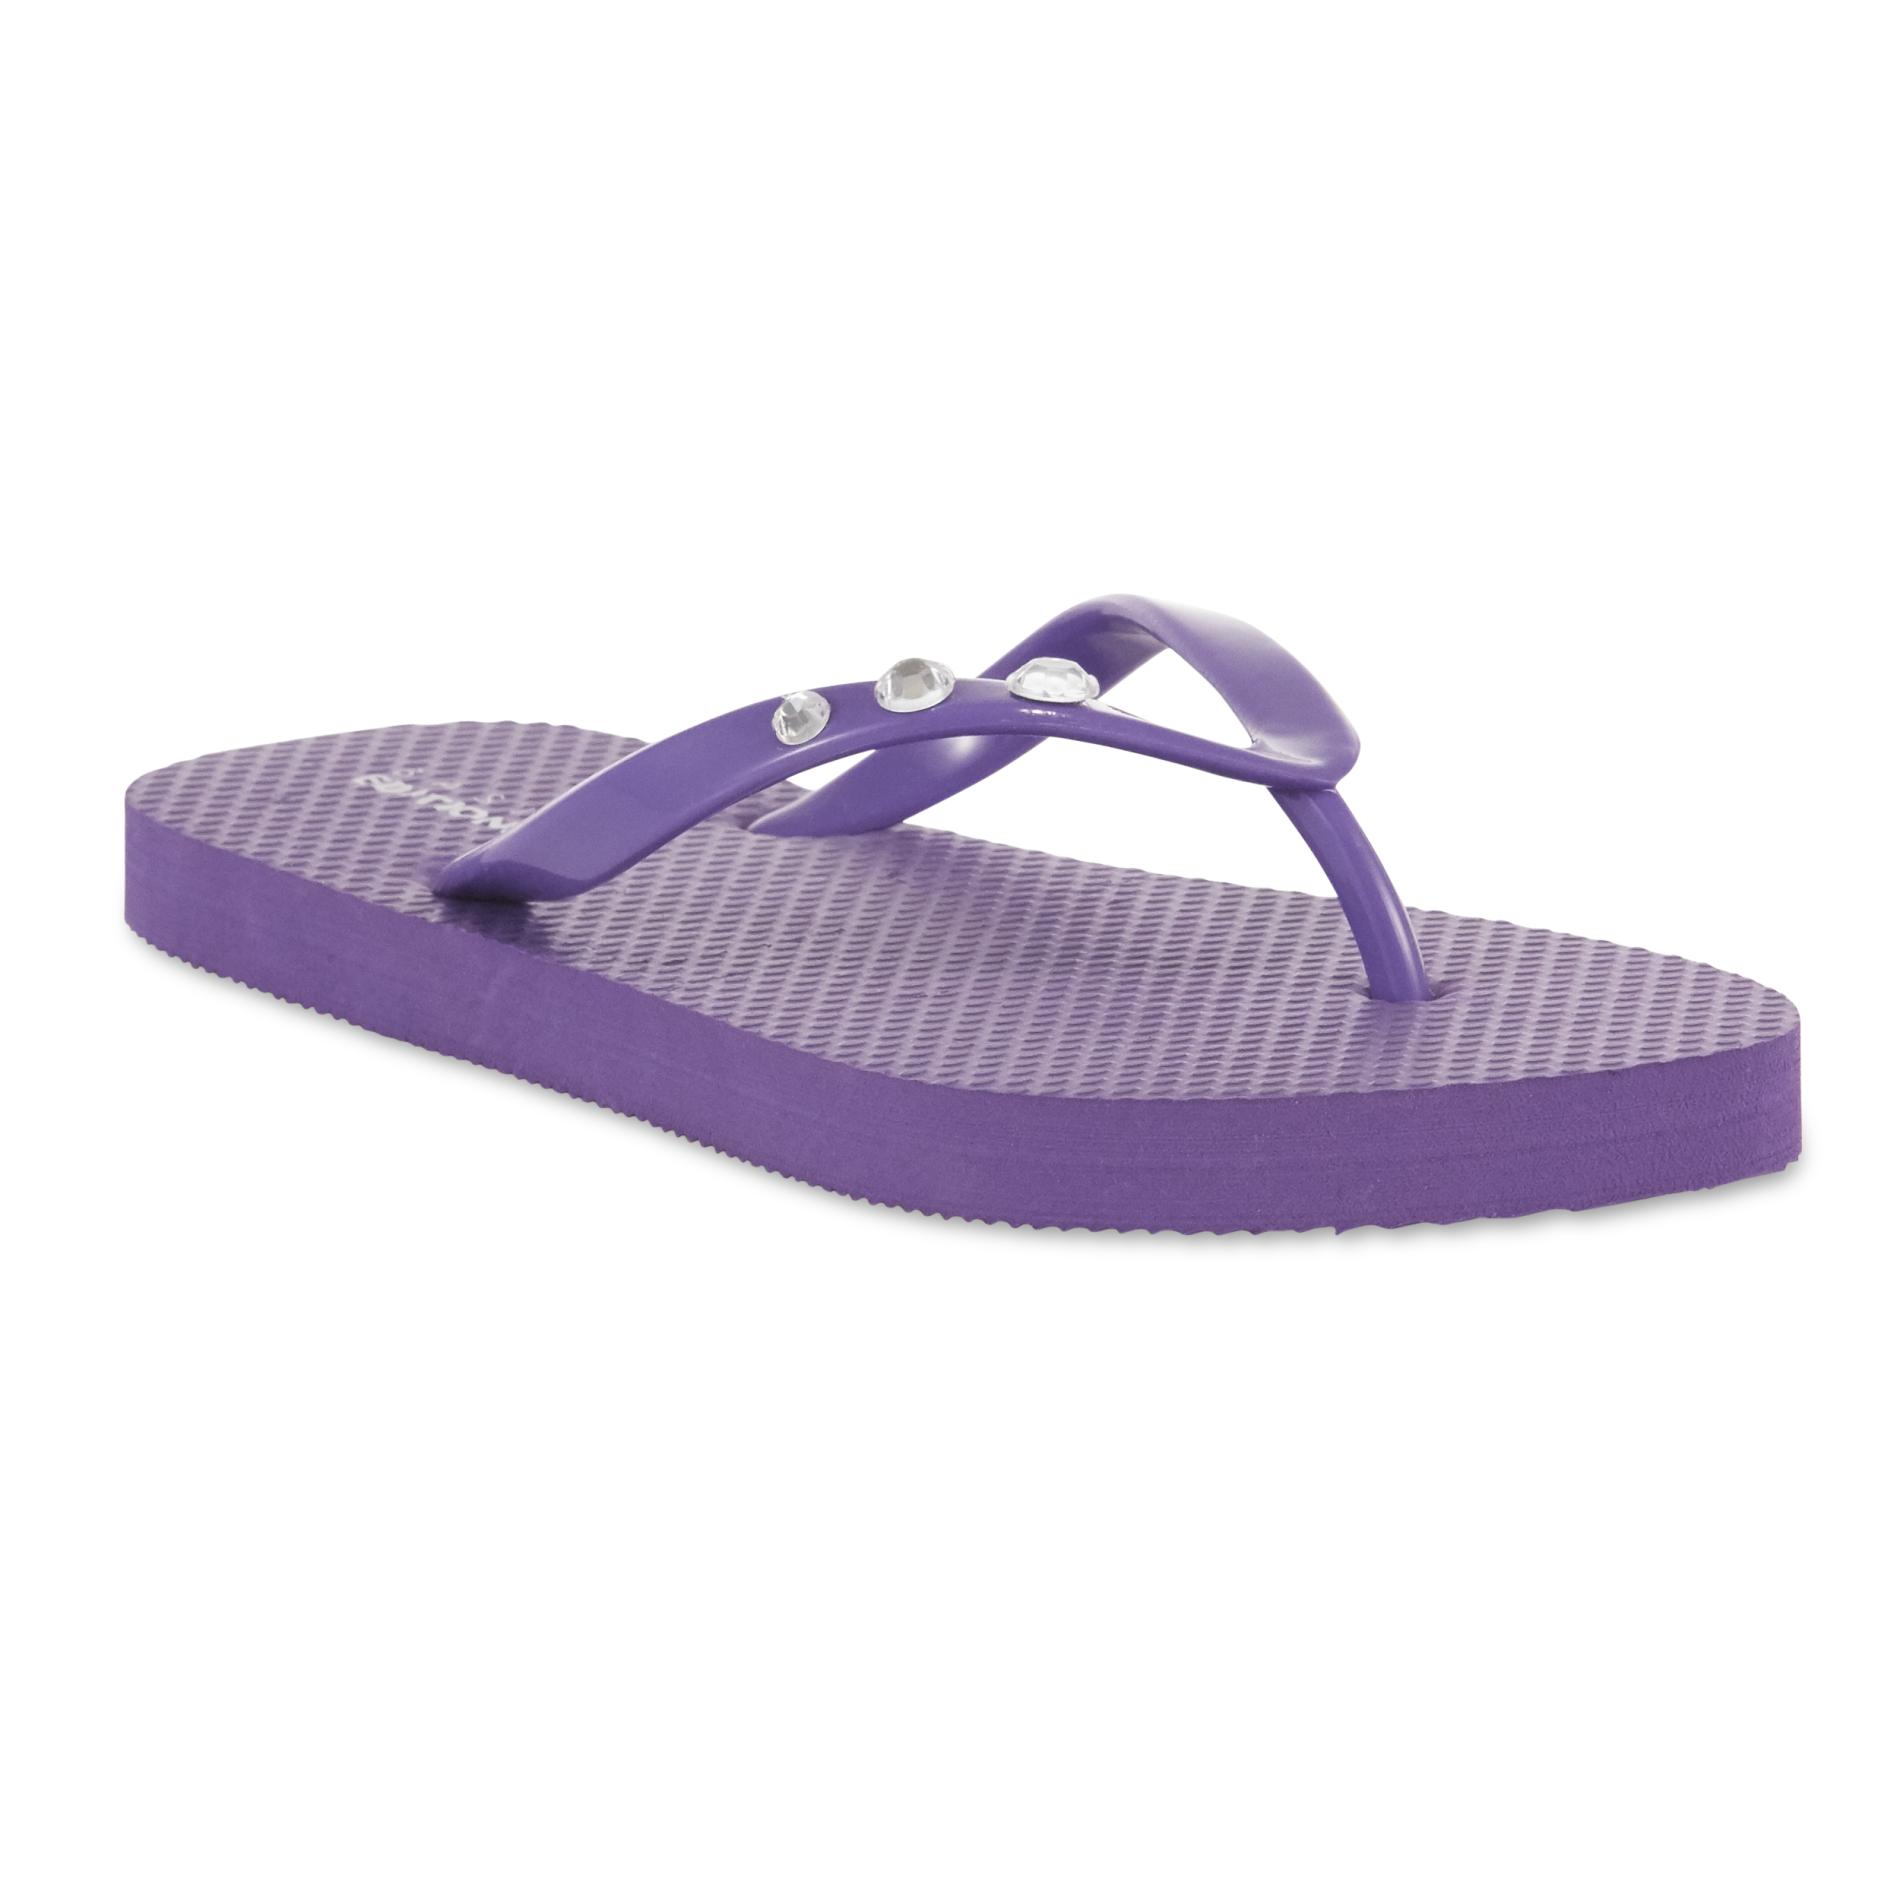 Basic Editions Girls' Sofia Purple Embellished Flip-Flop Sandal